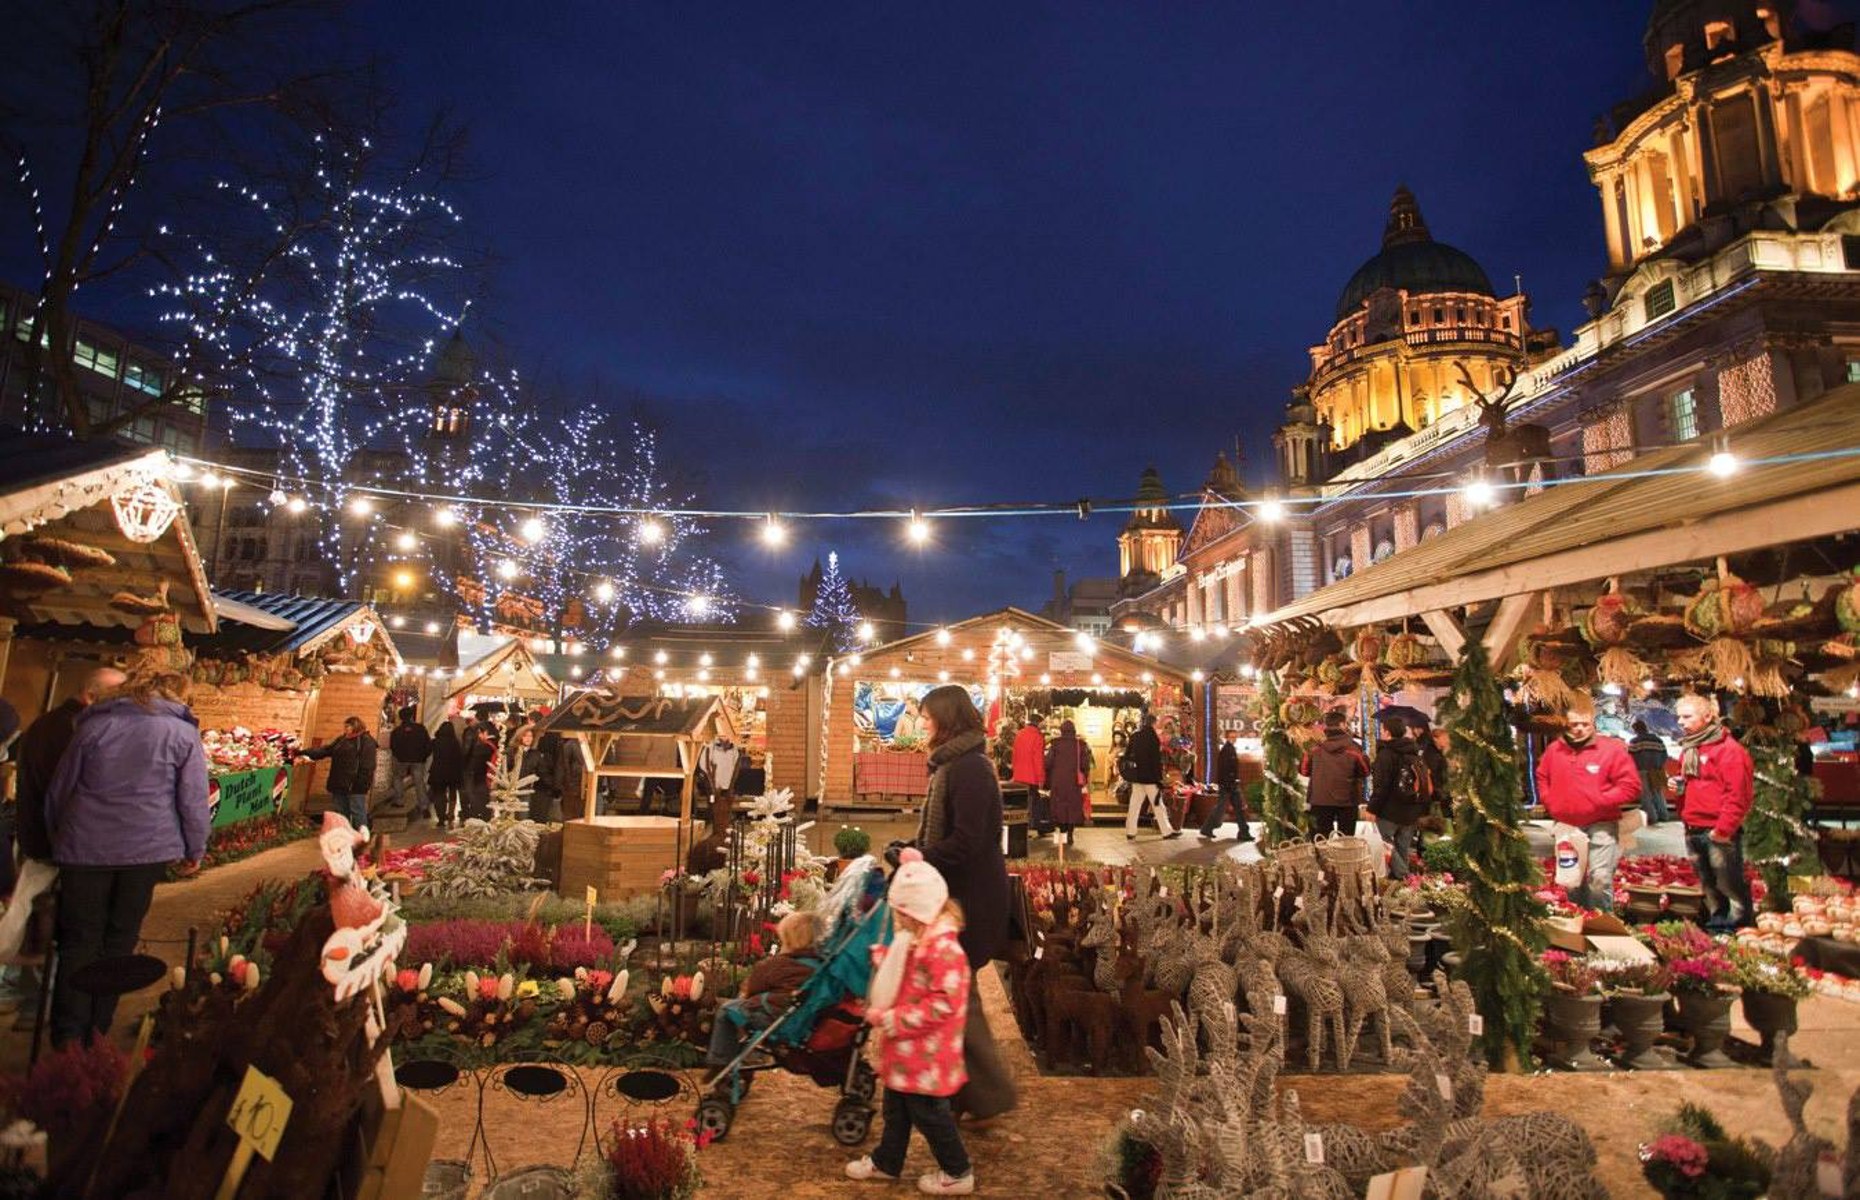 Belfast Christmas market (Image: Visit Belfast/Facebook)